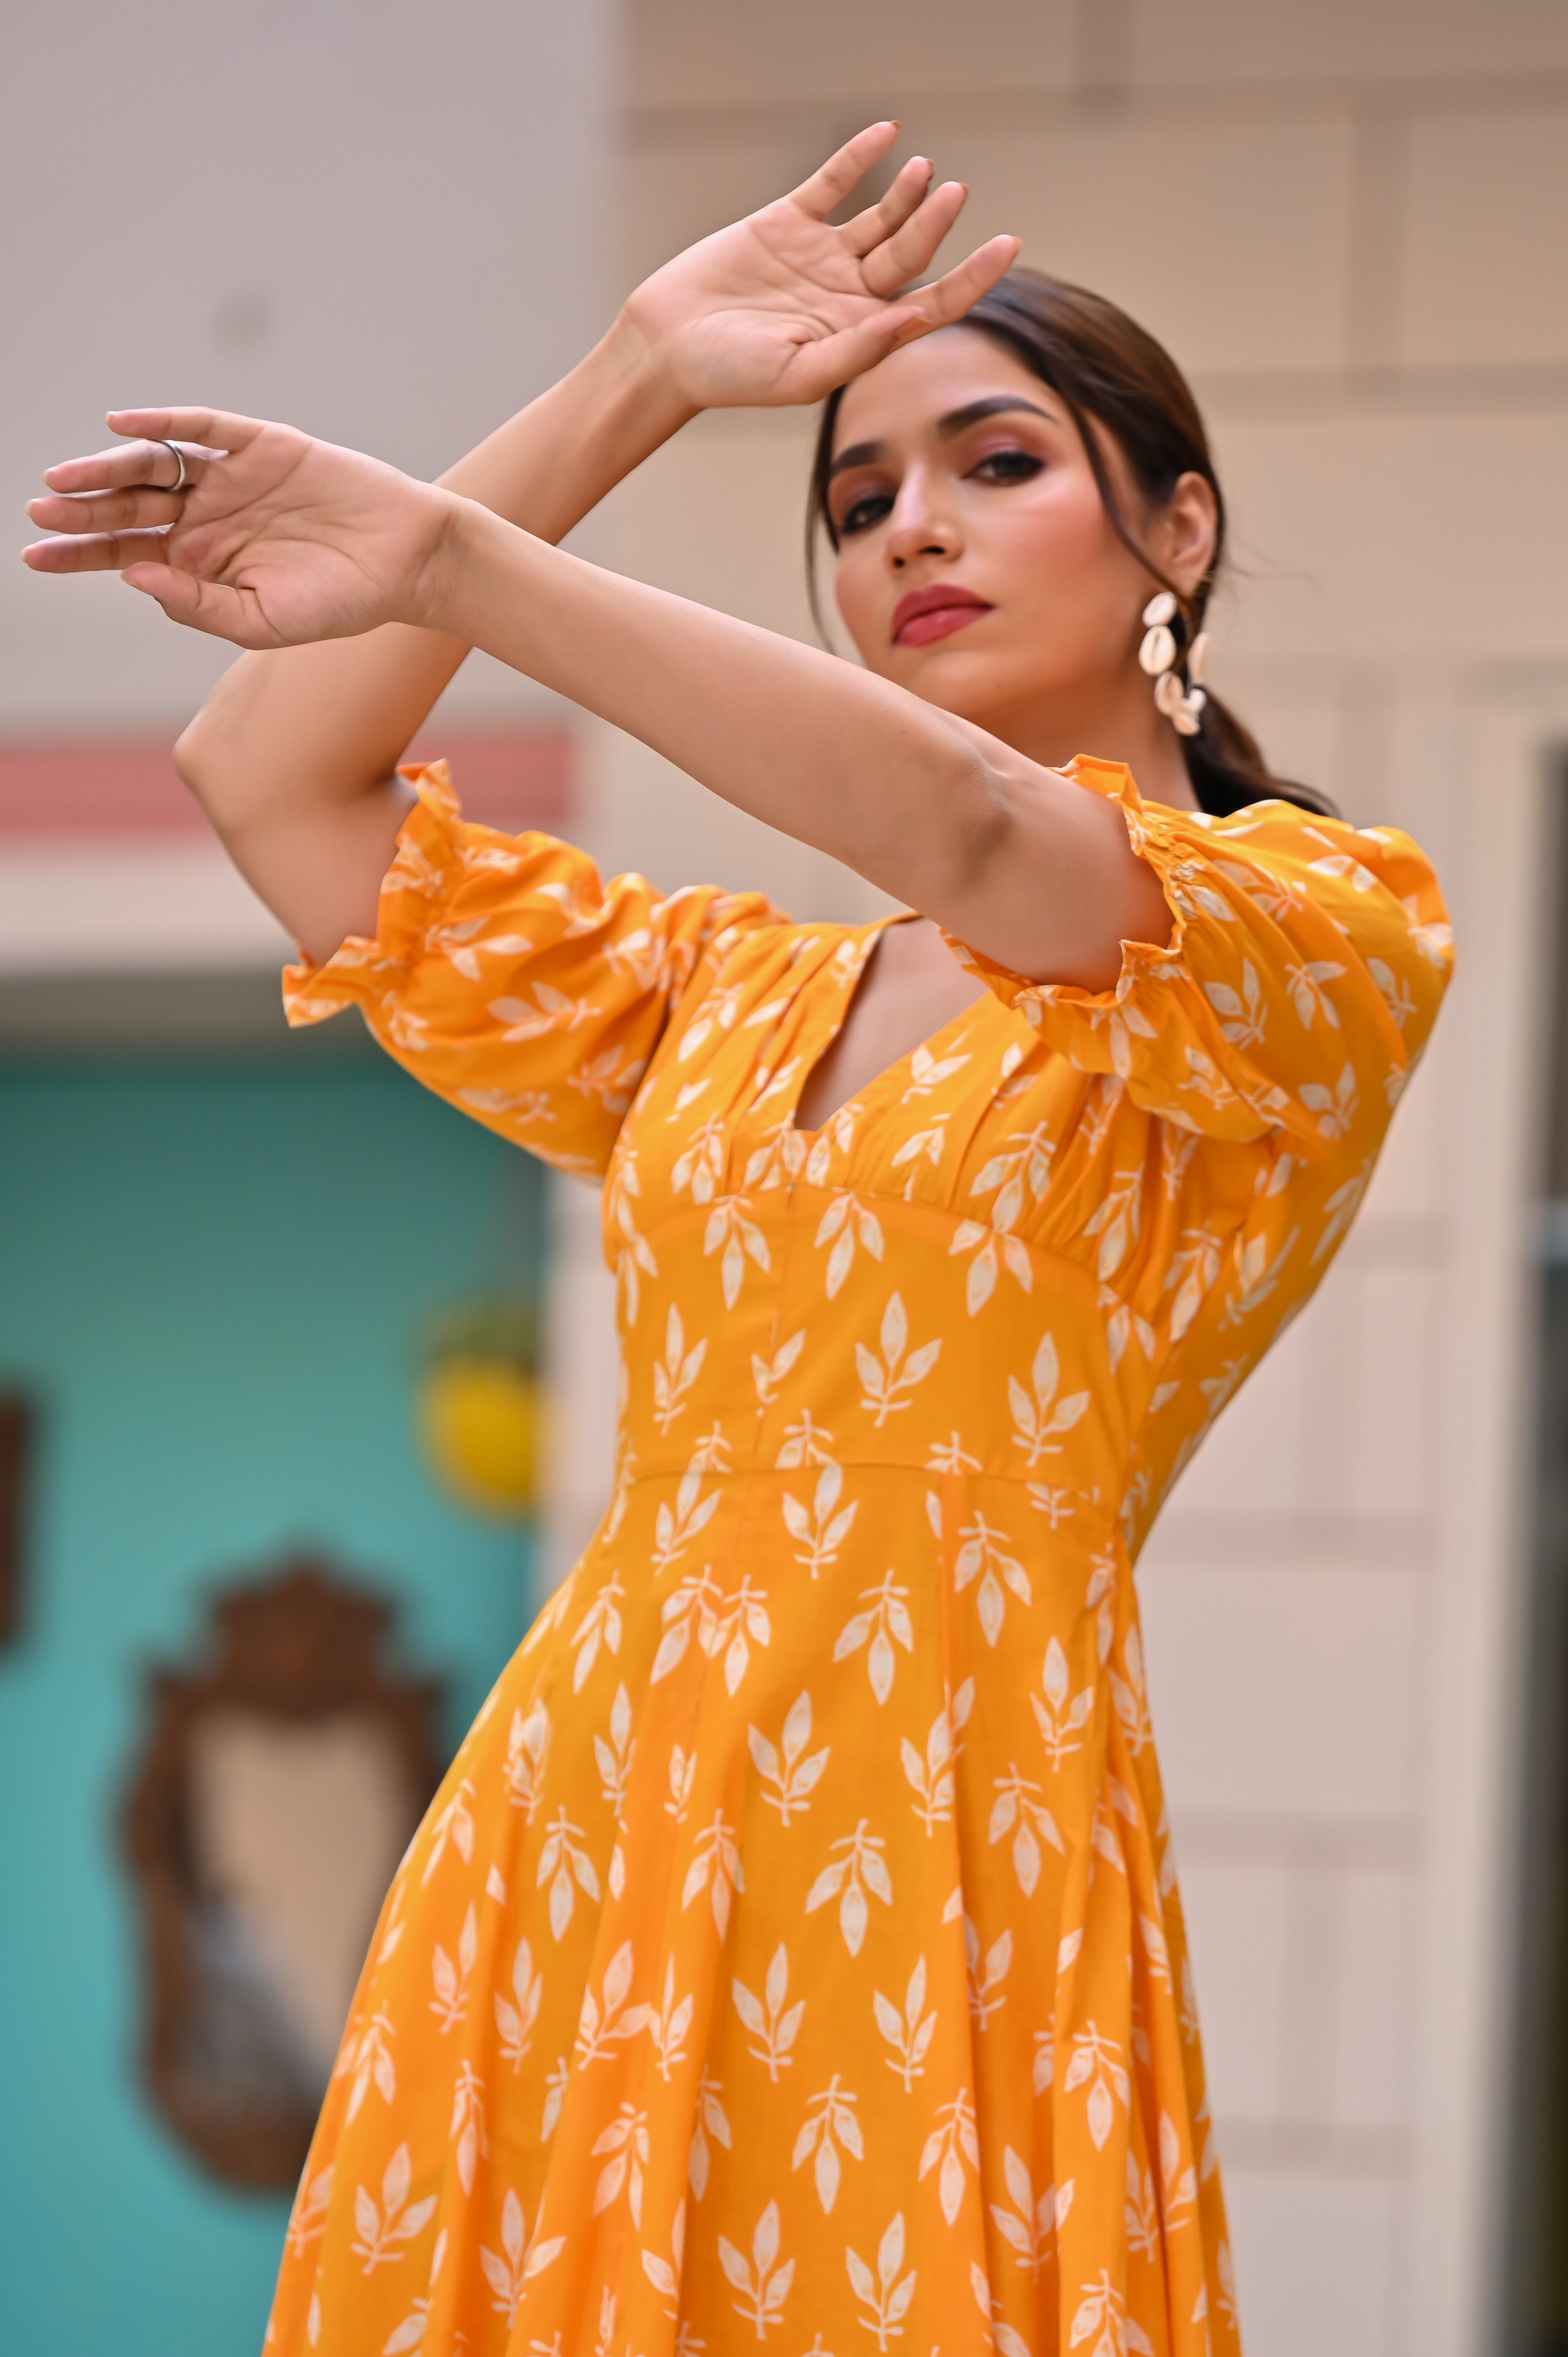 Women's Sunshine Yellow Classy Cotton Dress - Hatheli